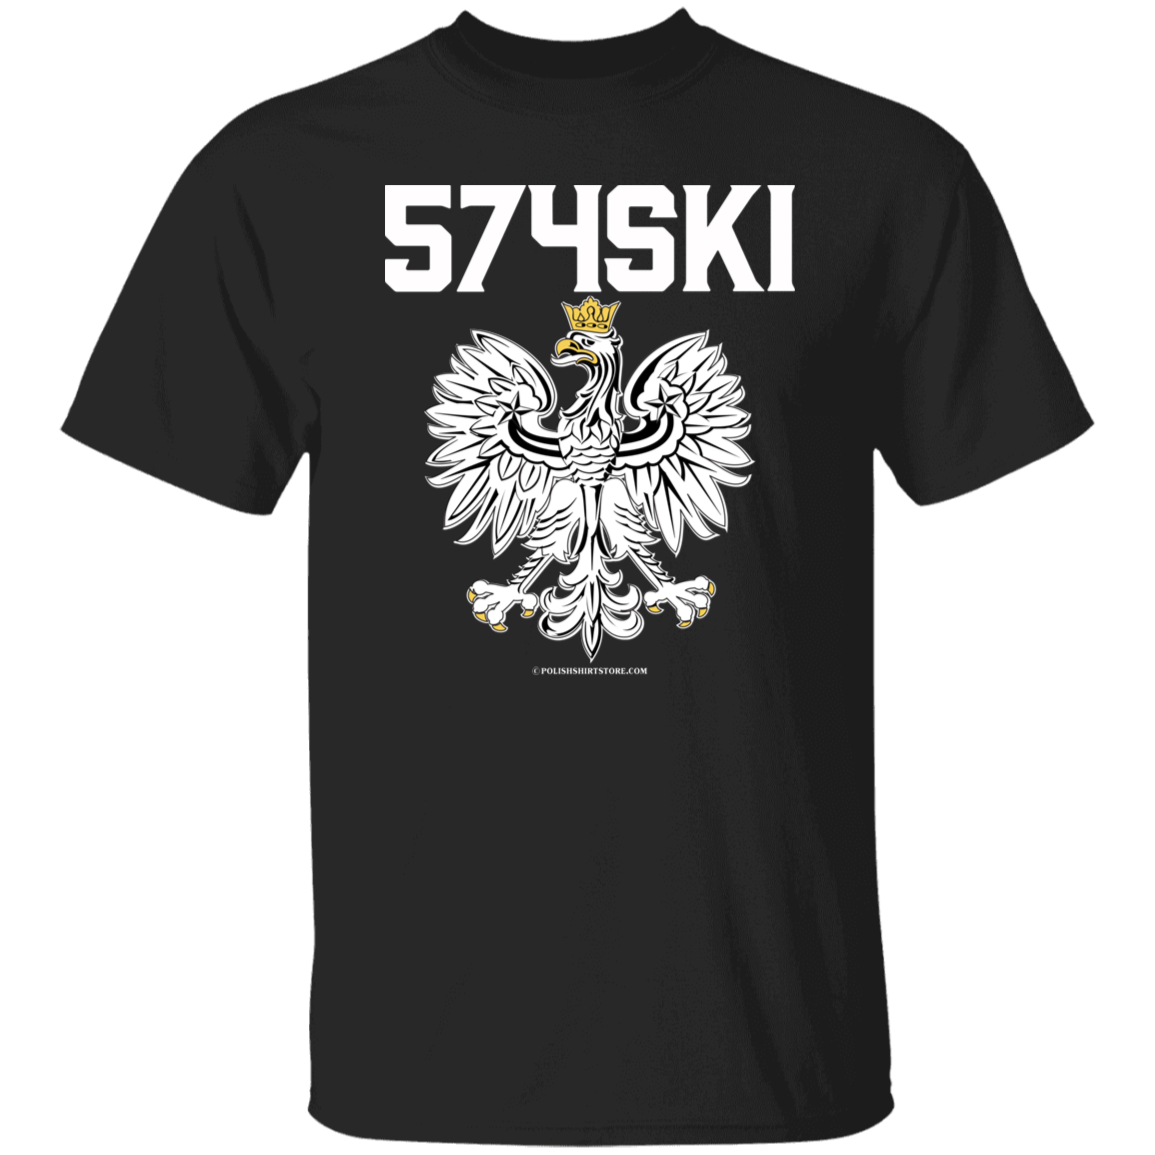 574SKI Apparel CustomCat G500 5.3 oz. T-Shirt Black S